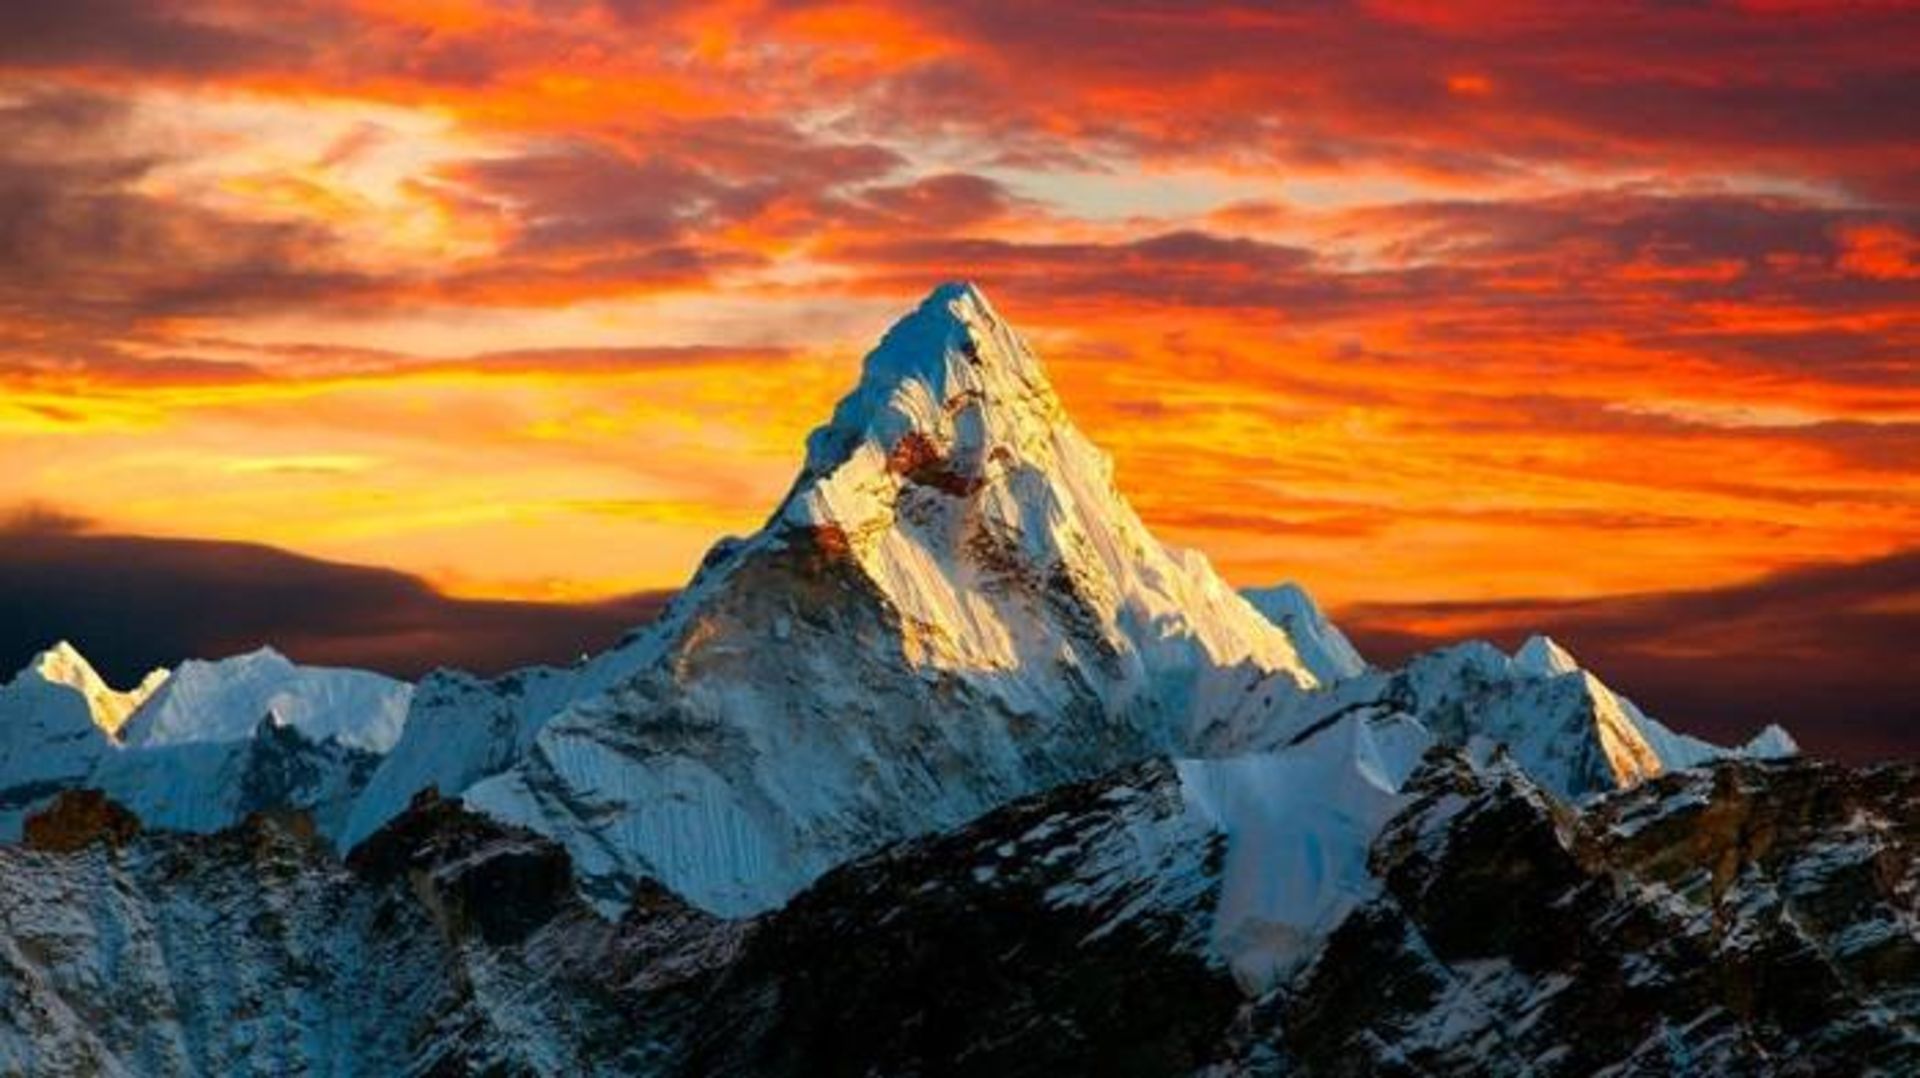 اورست در رشته کوه هیمالیا / Mount Everest 